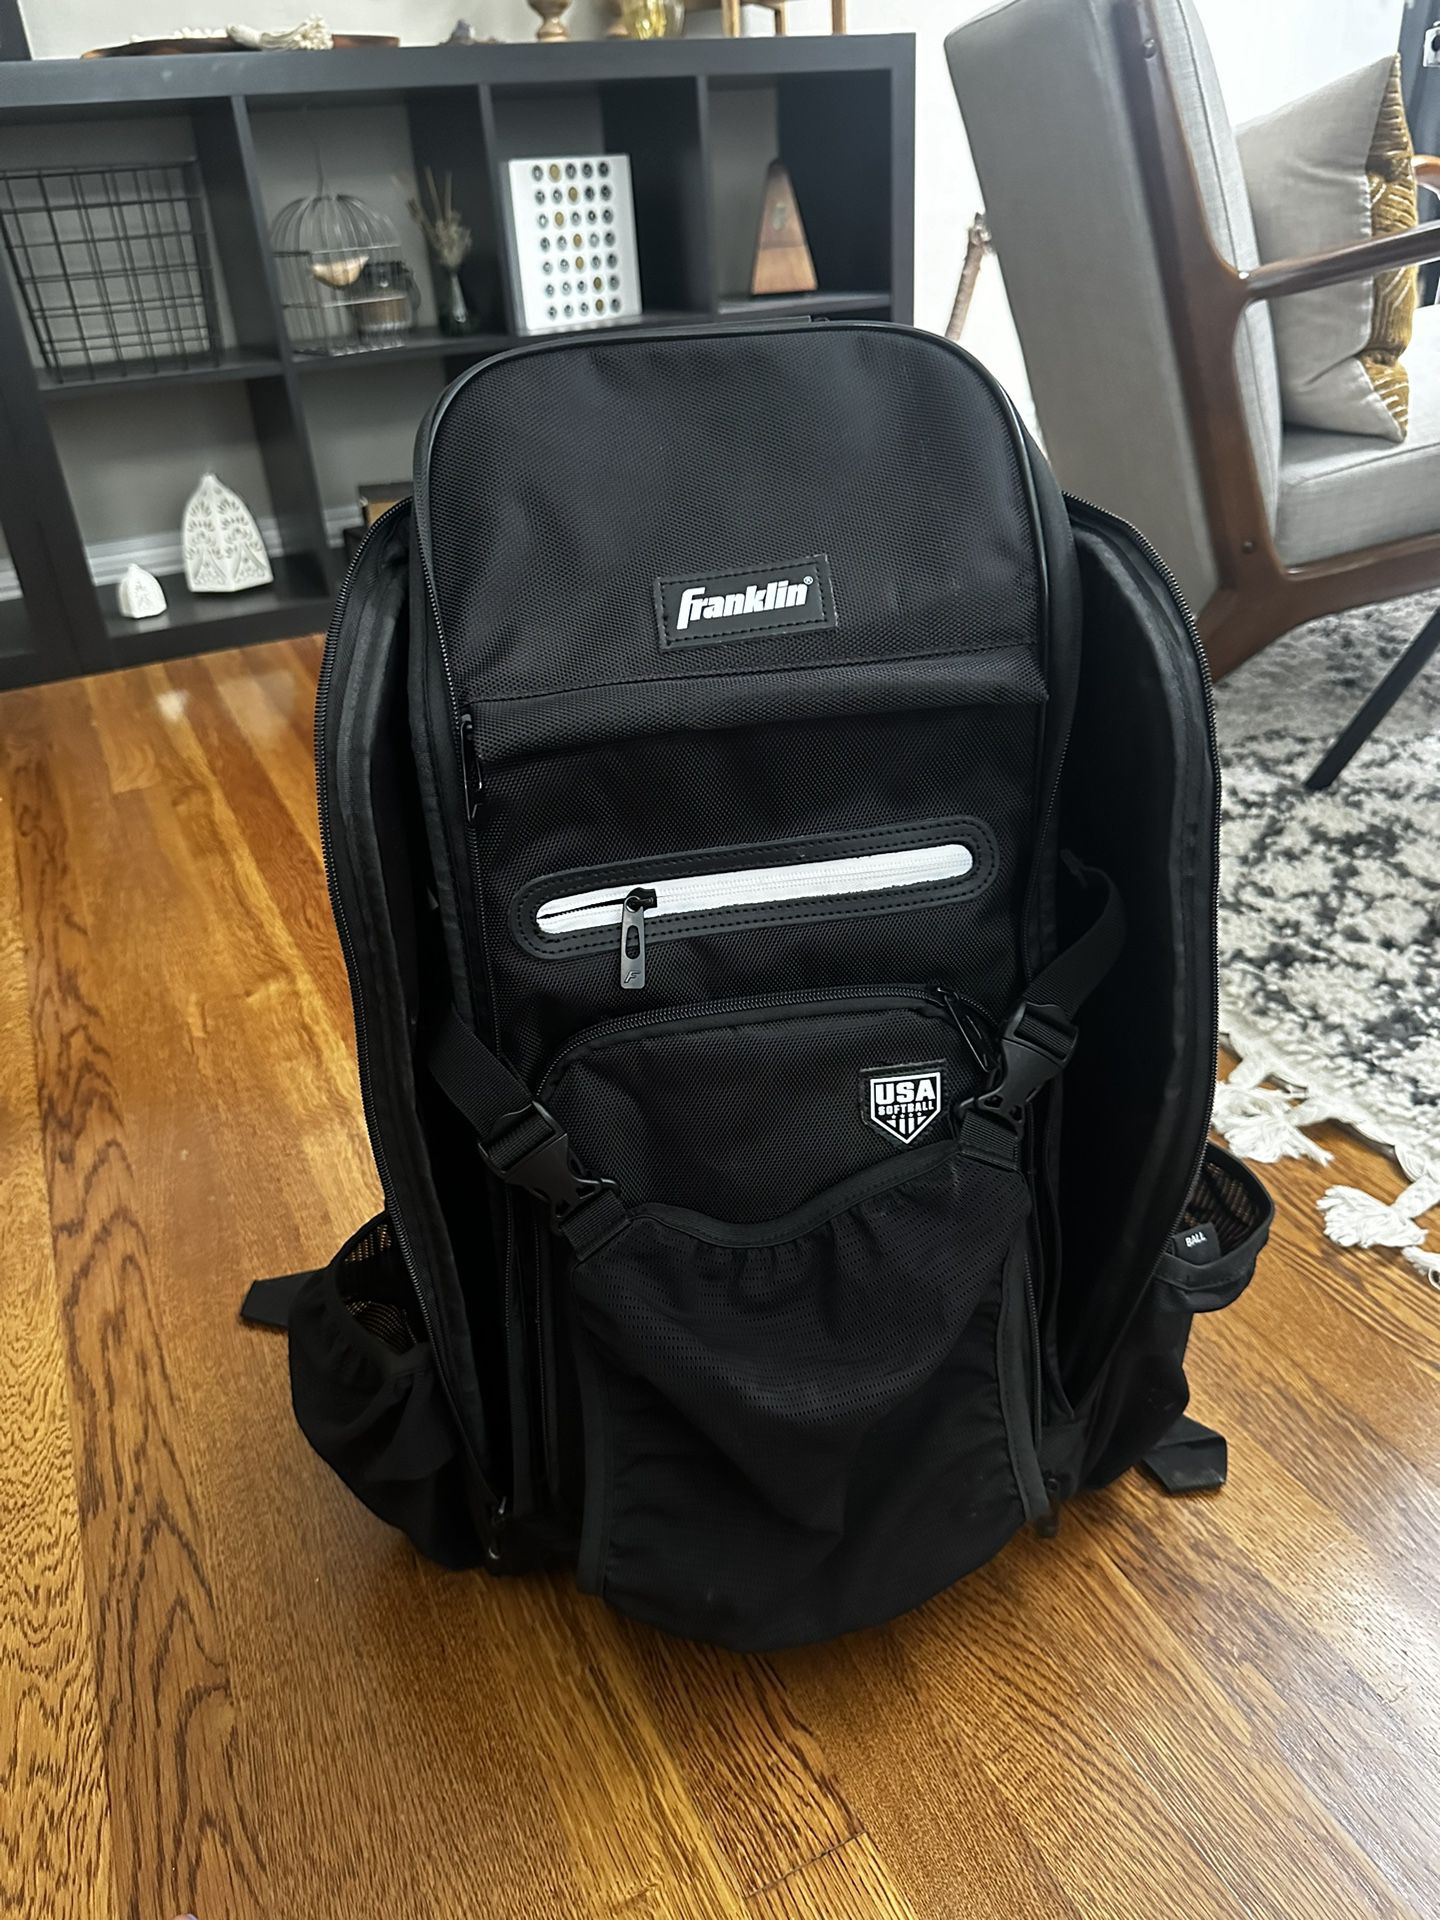 Franklin USA Softball Bat backpack